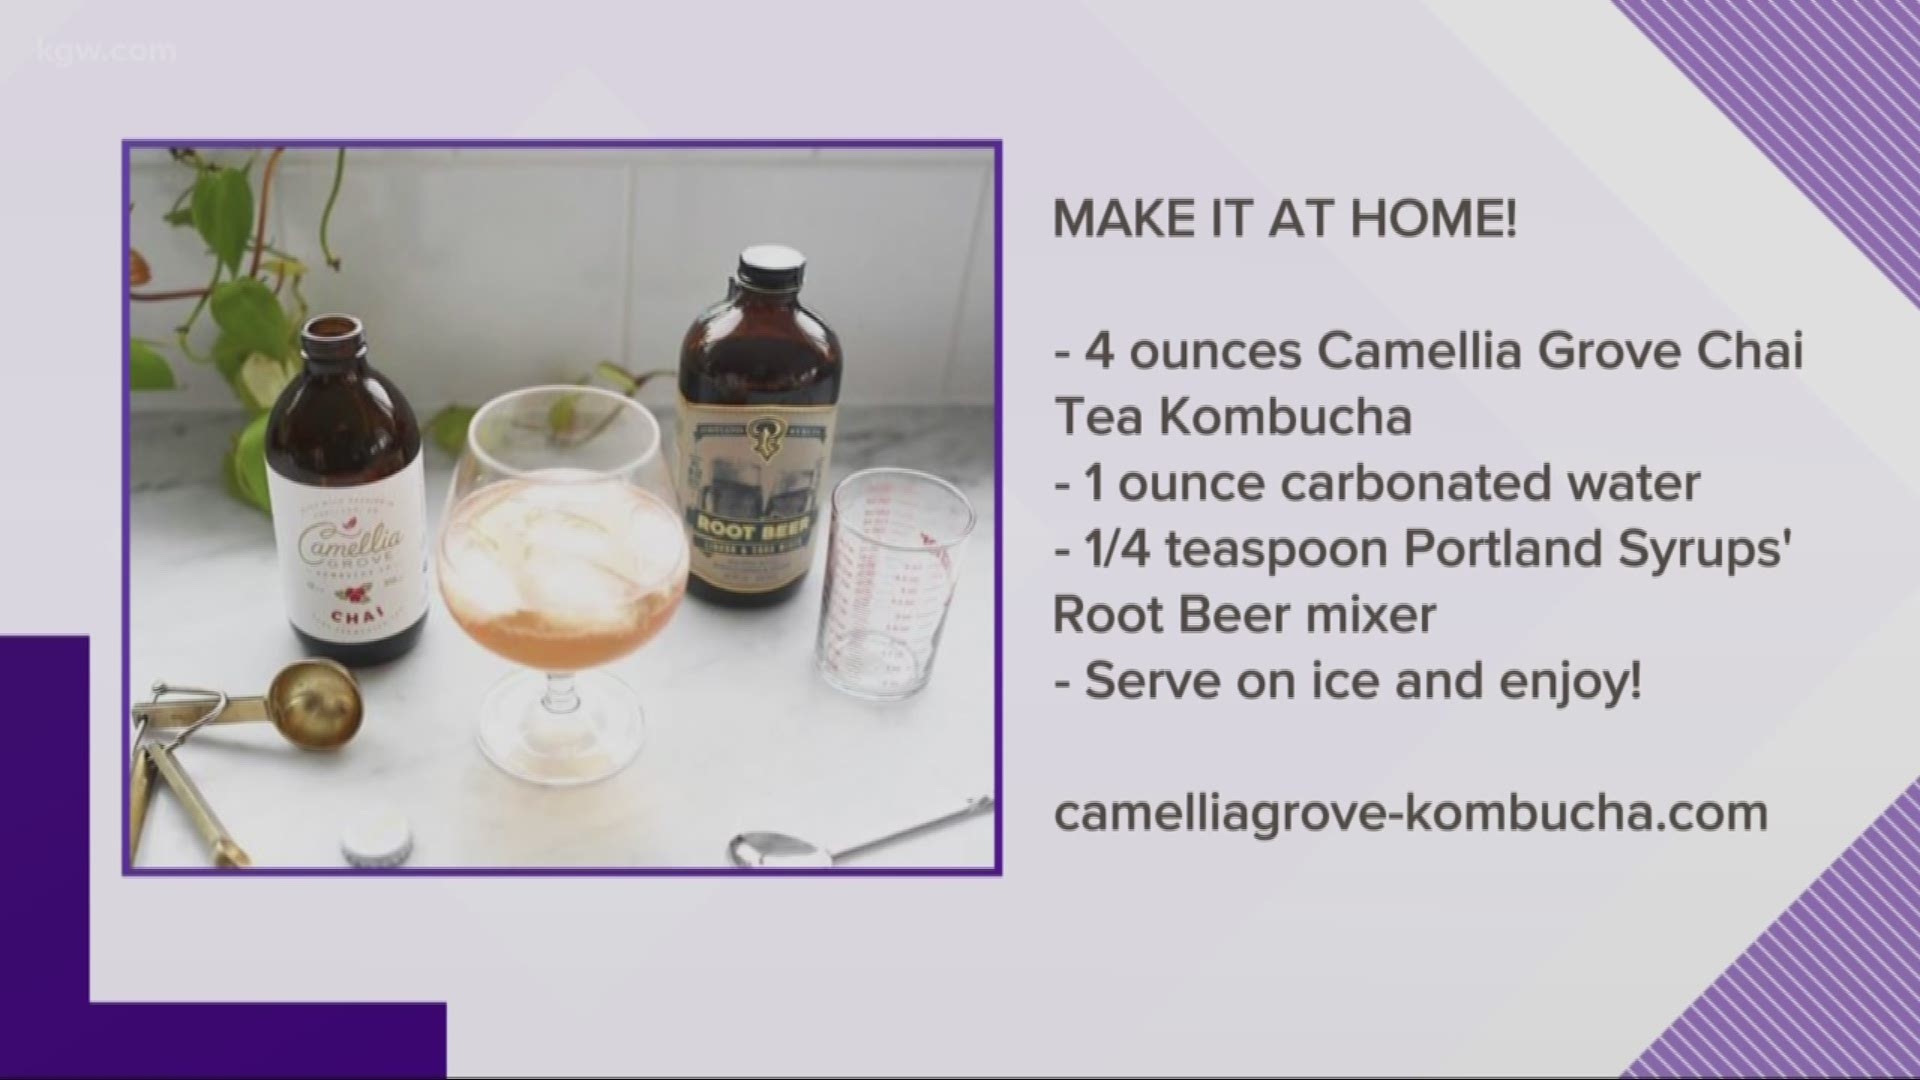 Camellia Grove Kombucha has a new Chai Kombucha. Learn to make a mocktail with the kombucha and root beer syrup.
#TonightwithCassidy
camelliagrove-kombucha.com